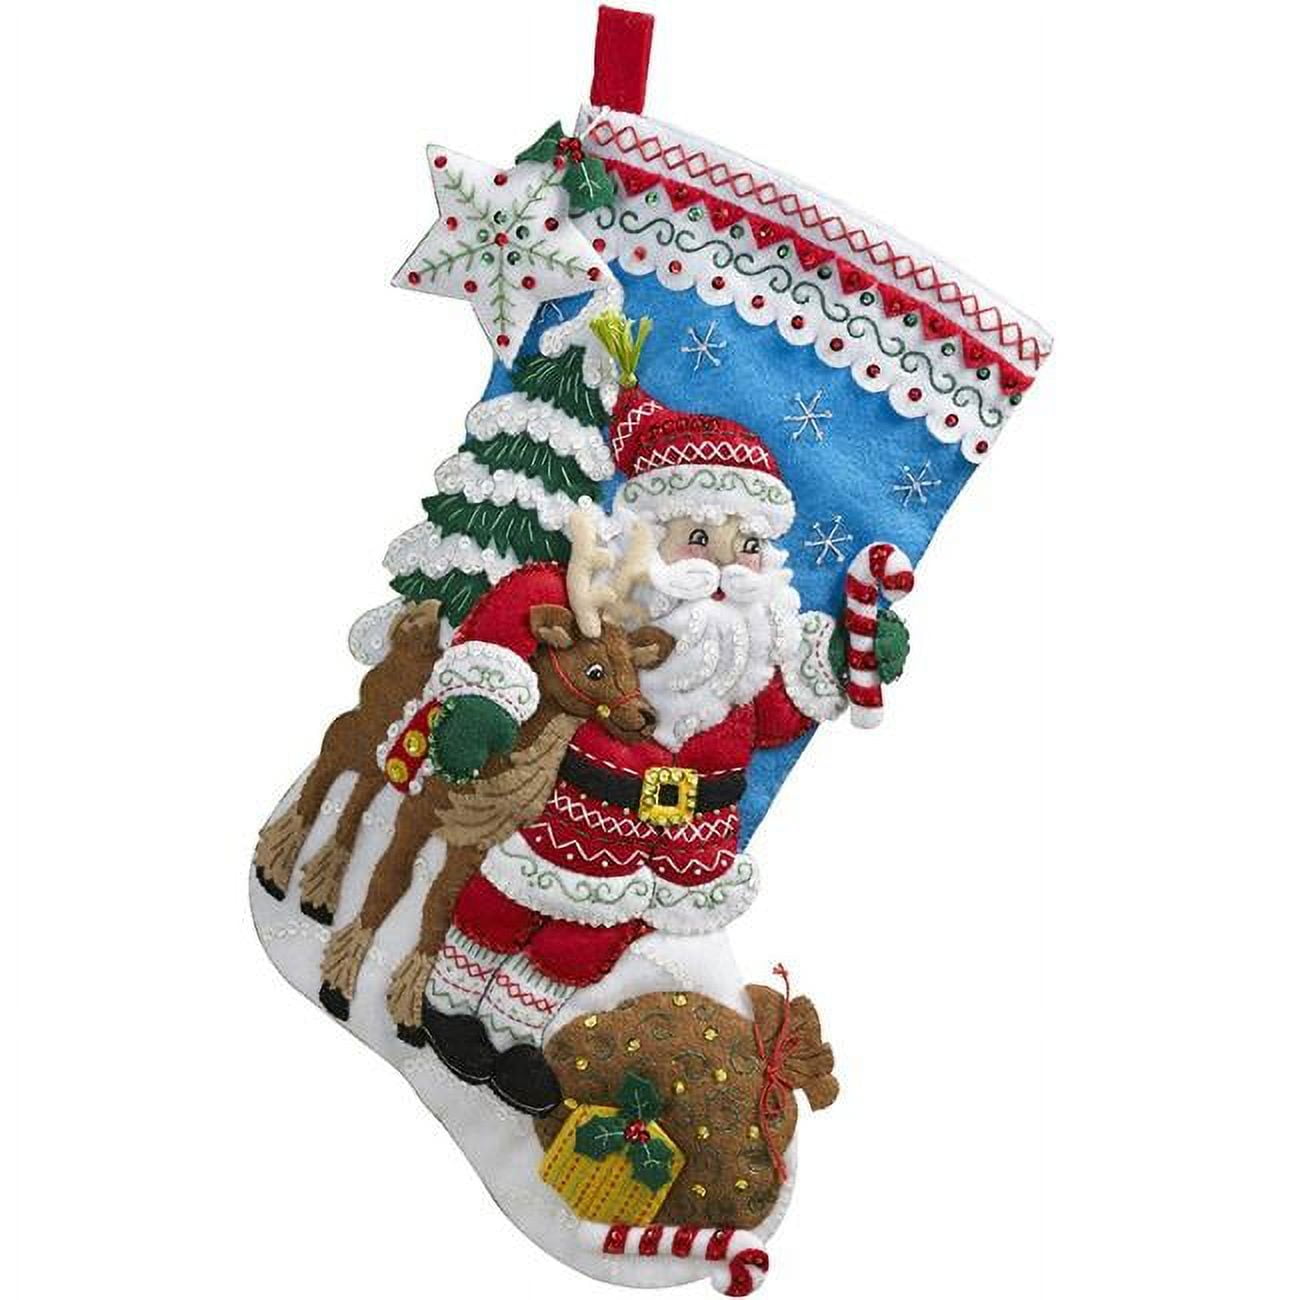 Bucilla ® Seasonal - Felt - Stocking Kits - Santa's Unicorn